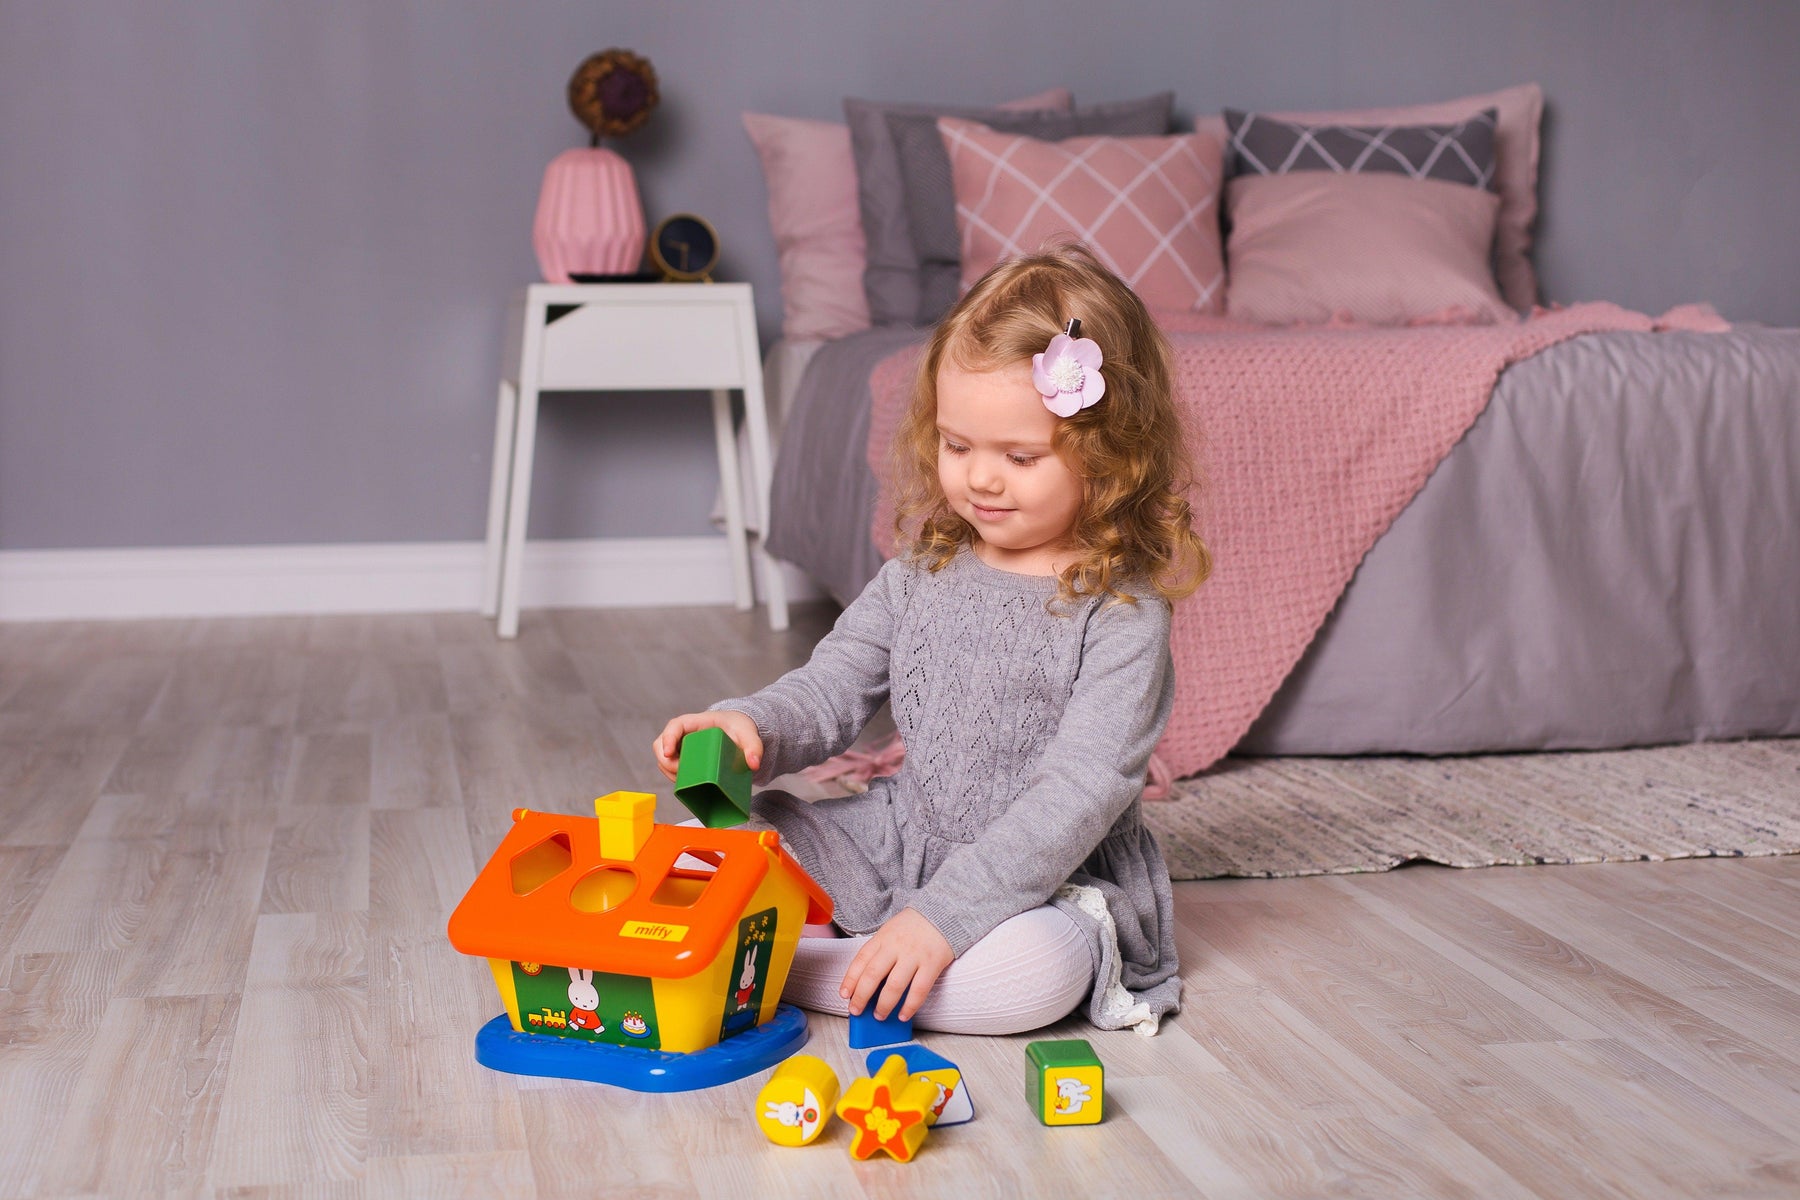 Montessori Toy Benefits - My Playroom 